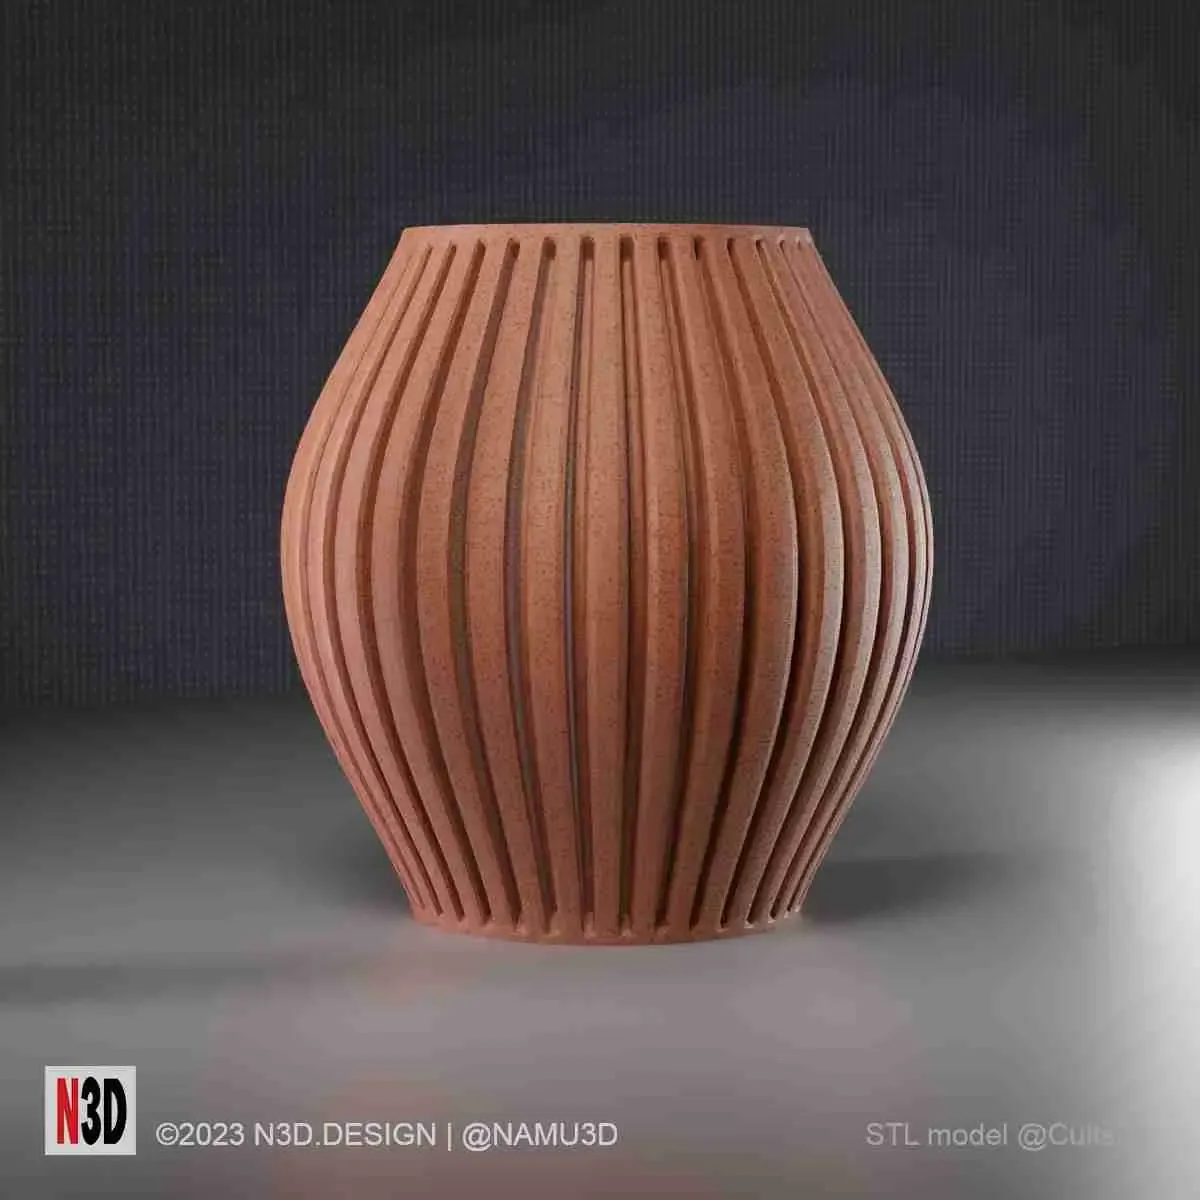 Vase 1002 - Striped vase